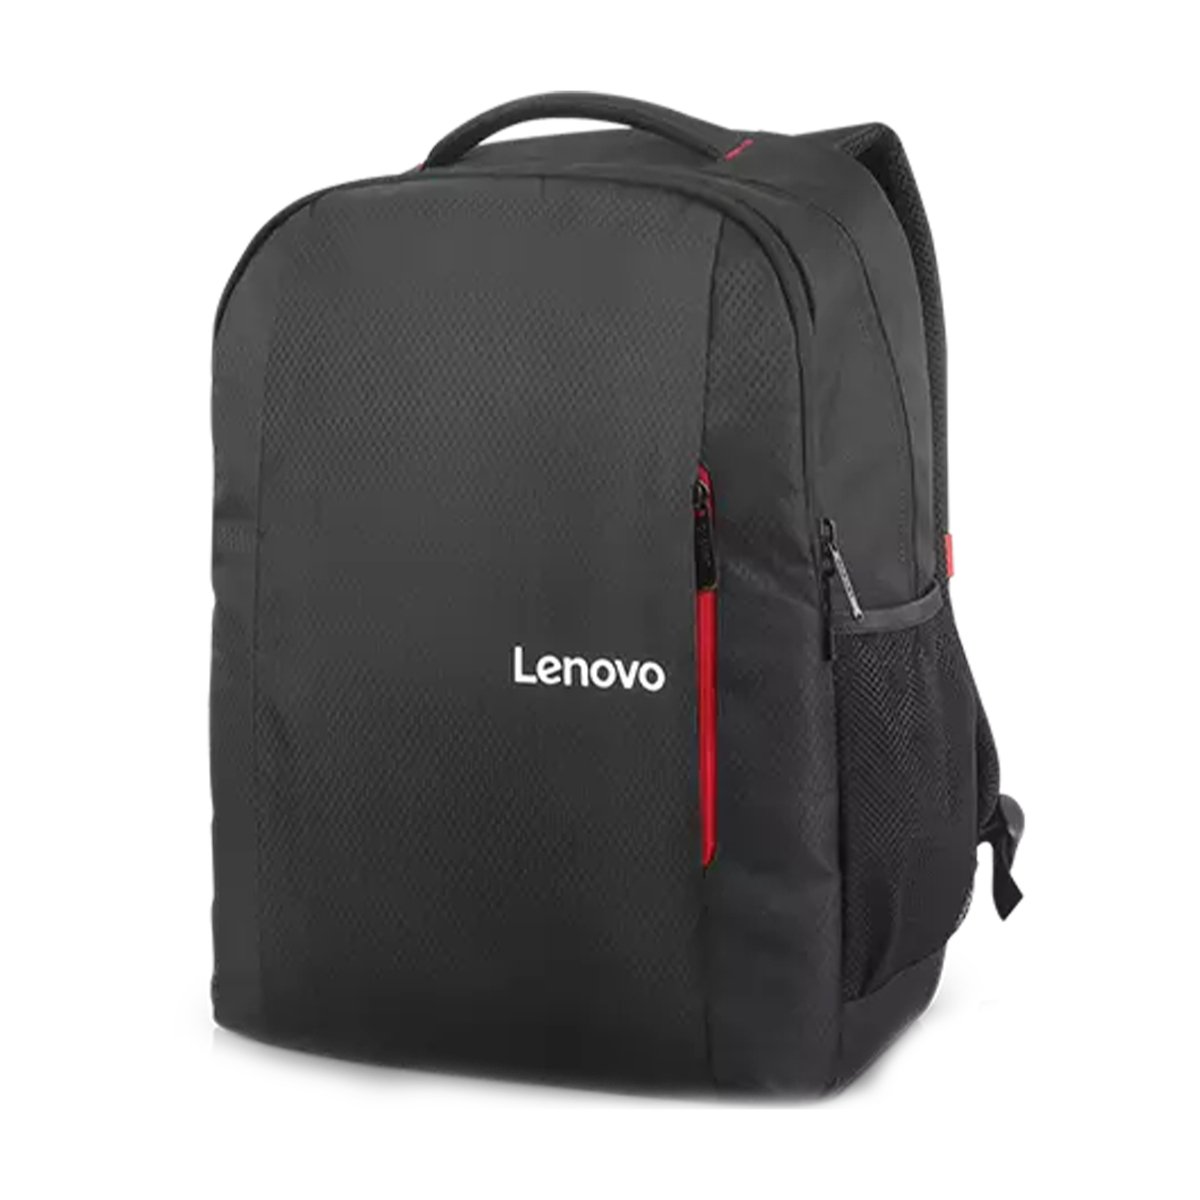 Lenovo 15.6” Laptop Everyday Backpack B515 - Black GX40Q75215